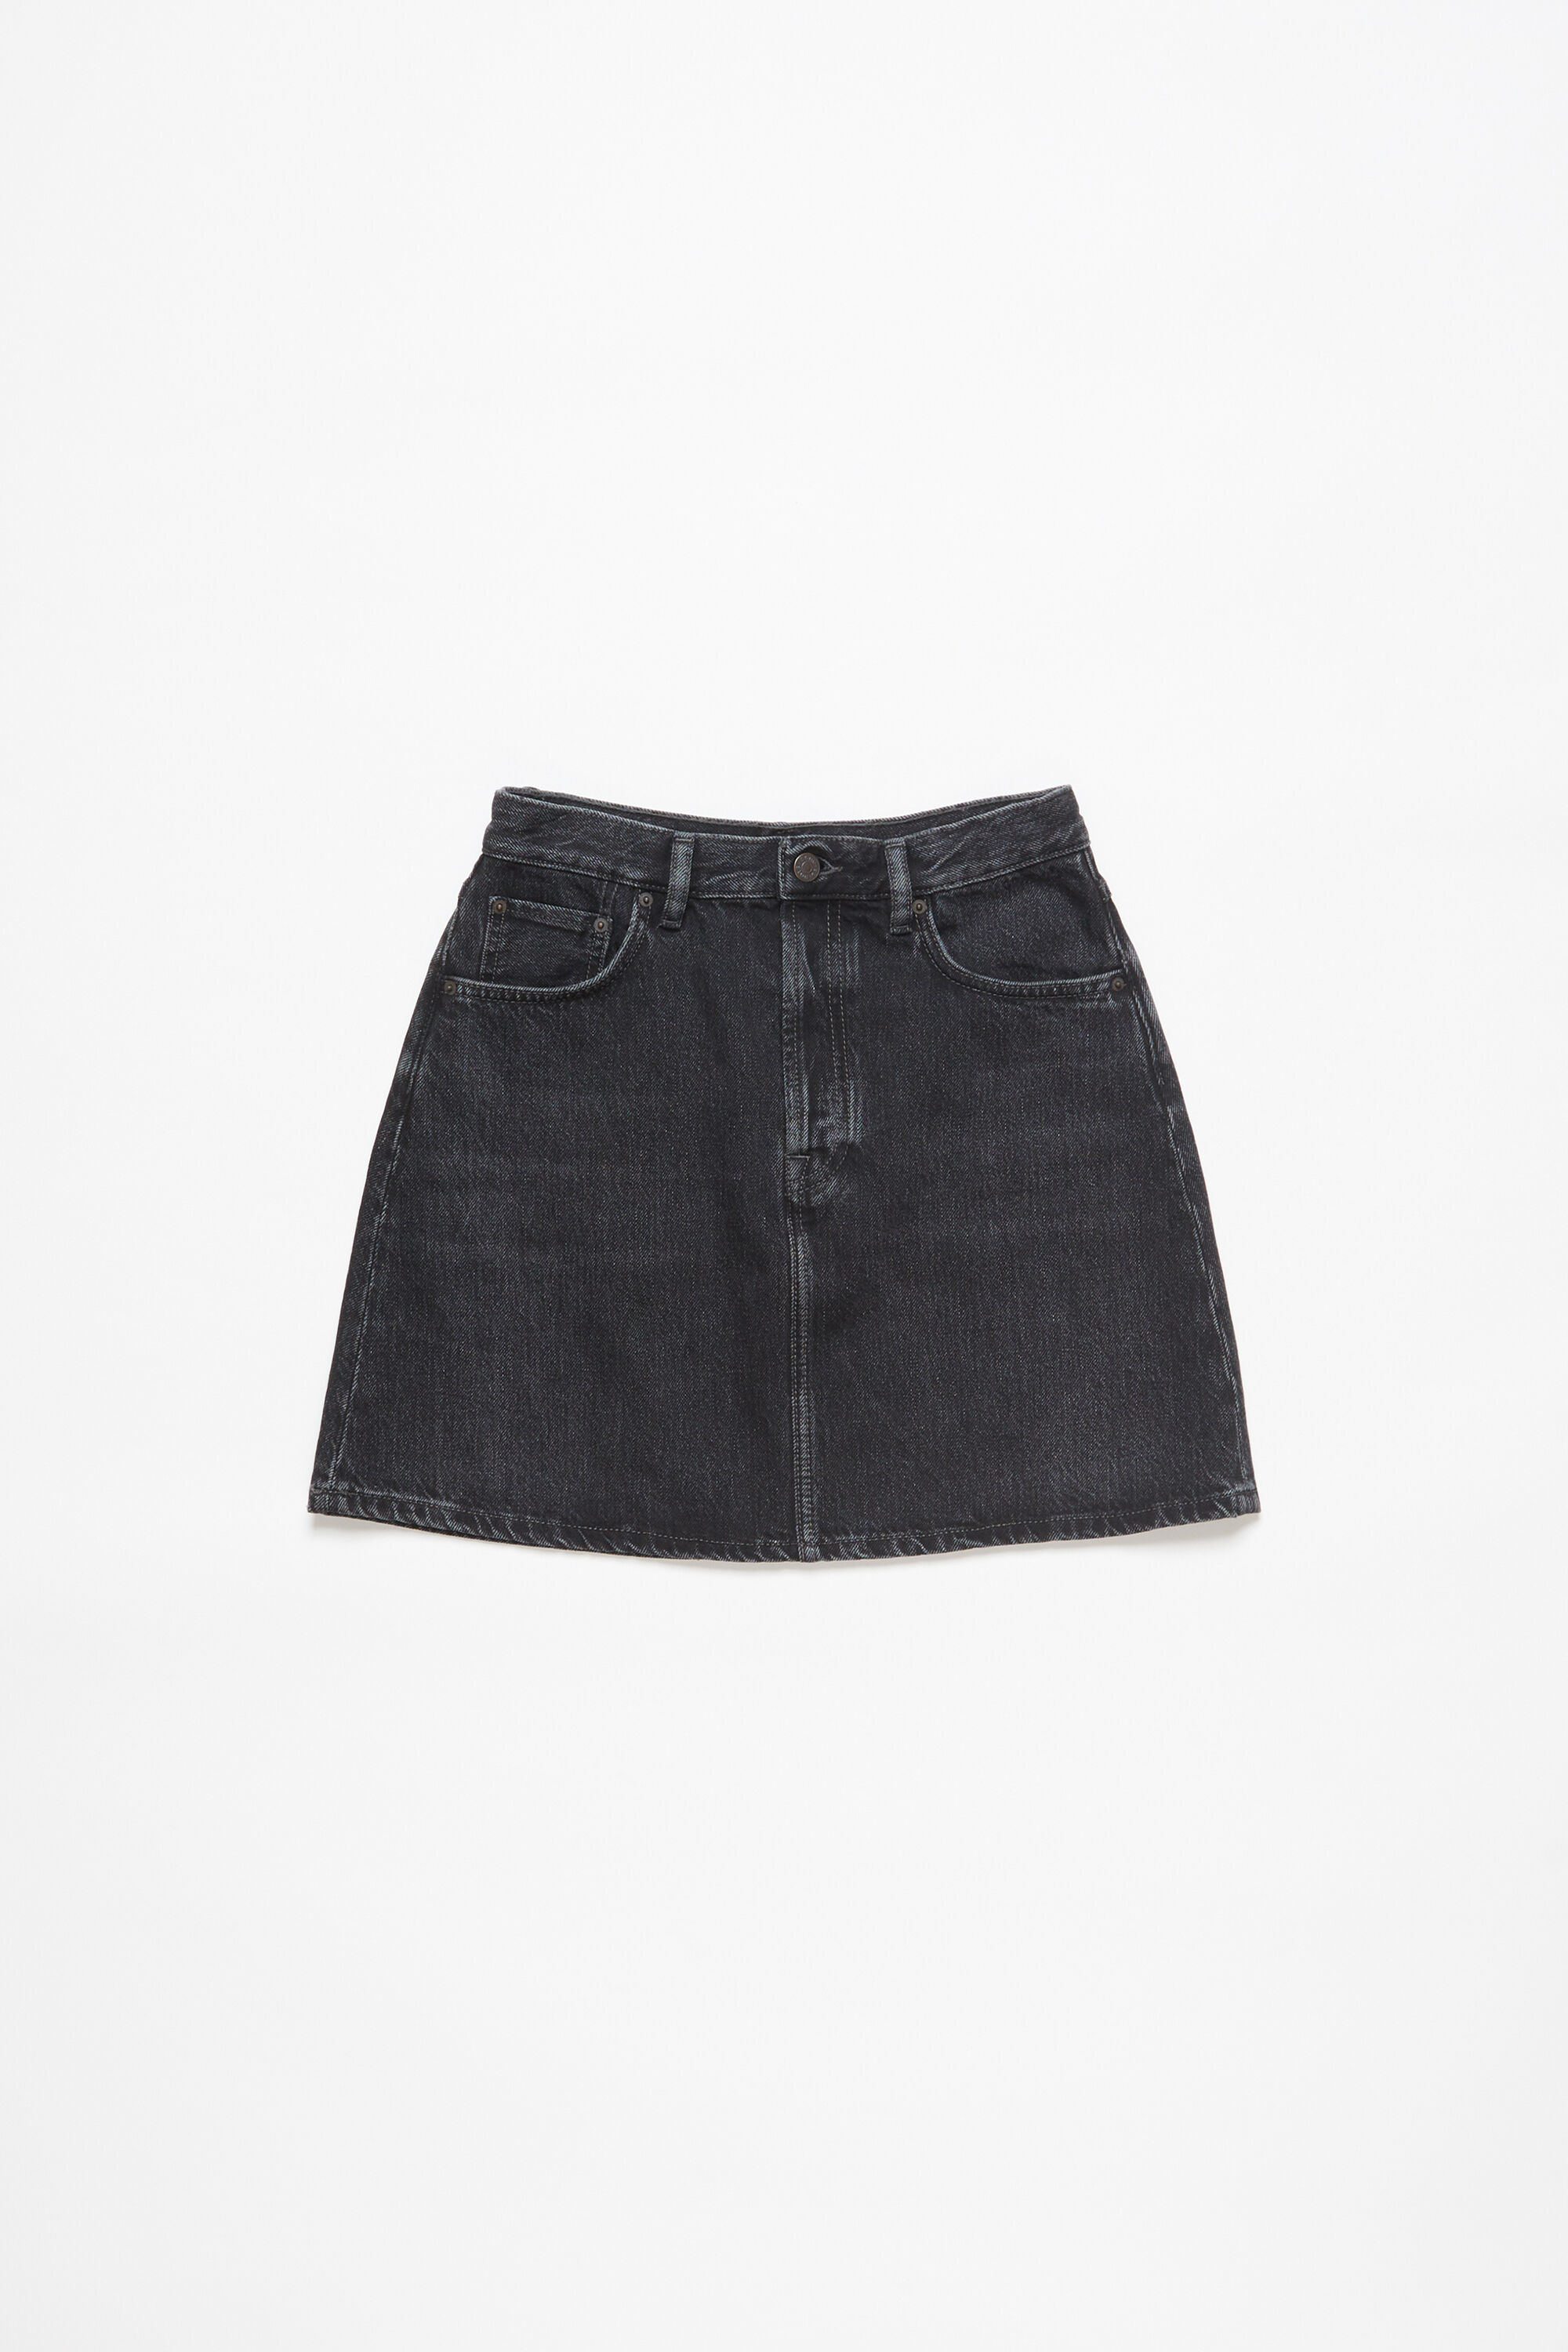 Buy PepTrends Women's Black Denim Skirt(XS-XL Size) at Amazon.in